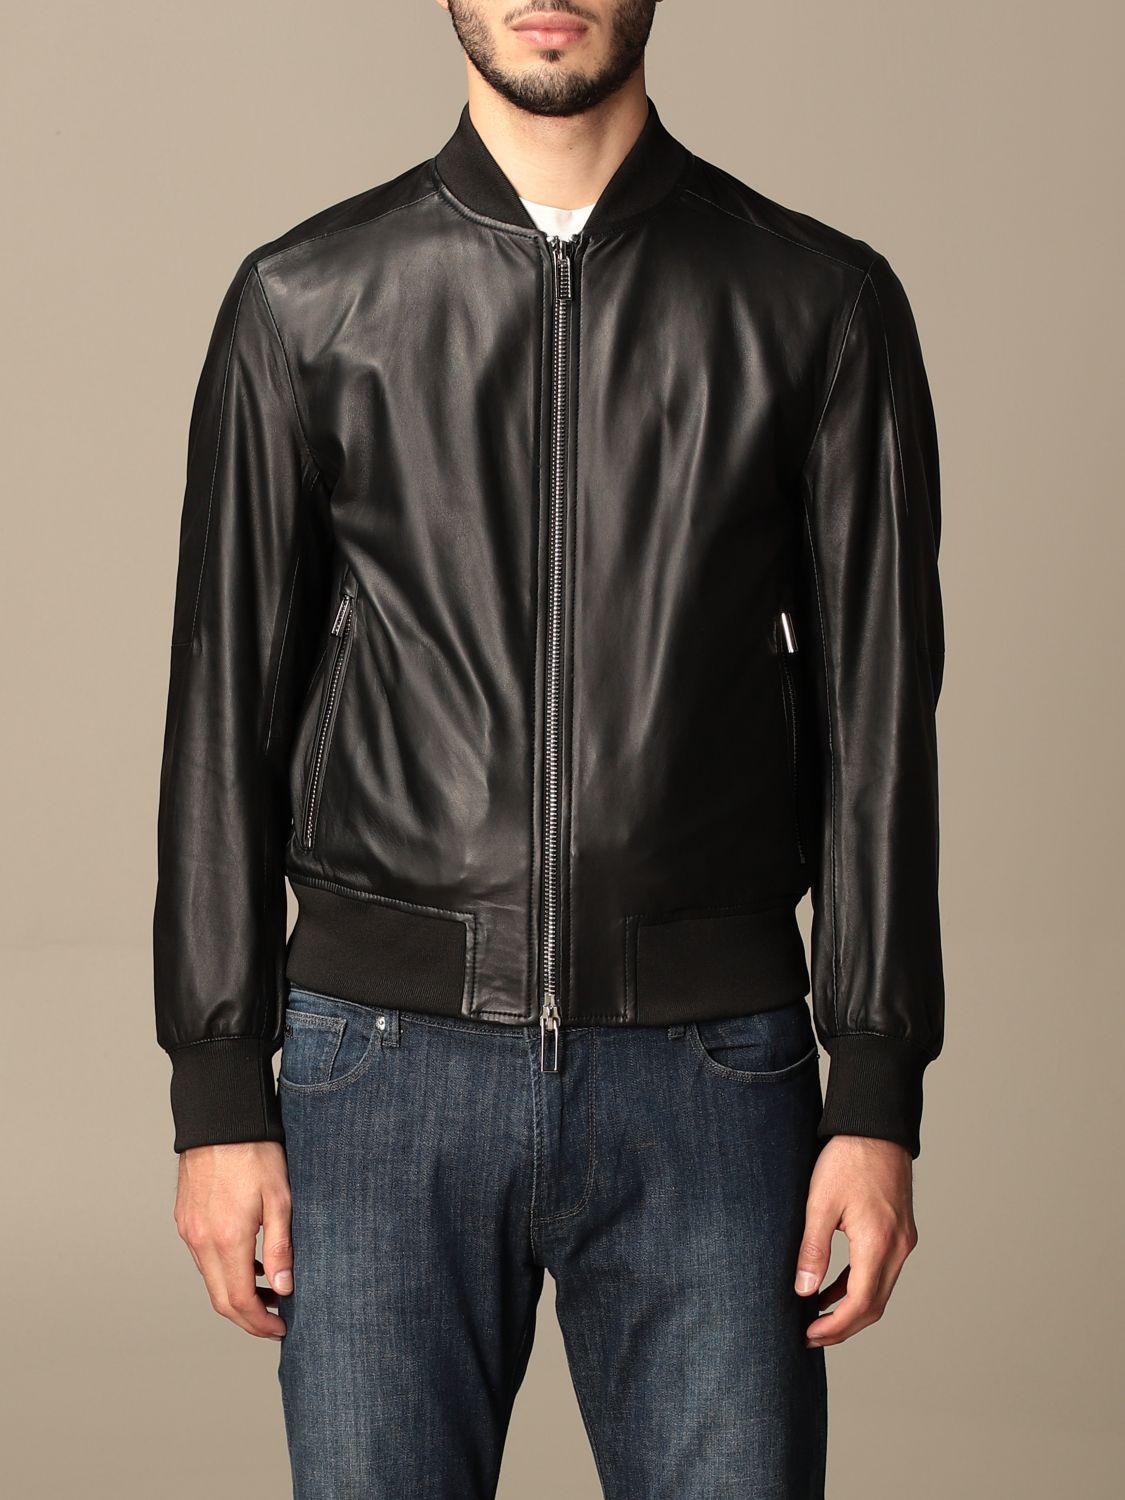 EMPORIO ARMANI: leather bomber jacket - Black | Emporio Armani jacket ...